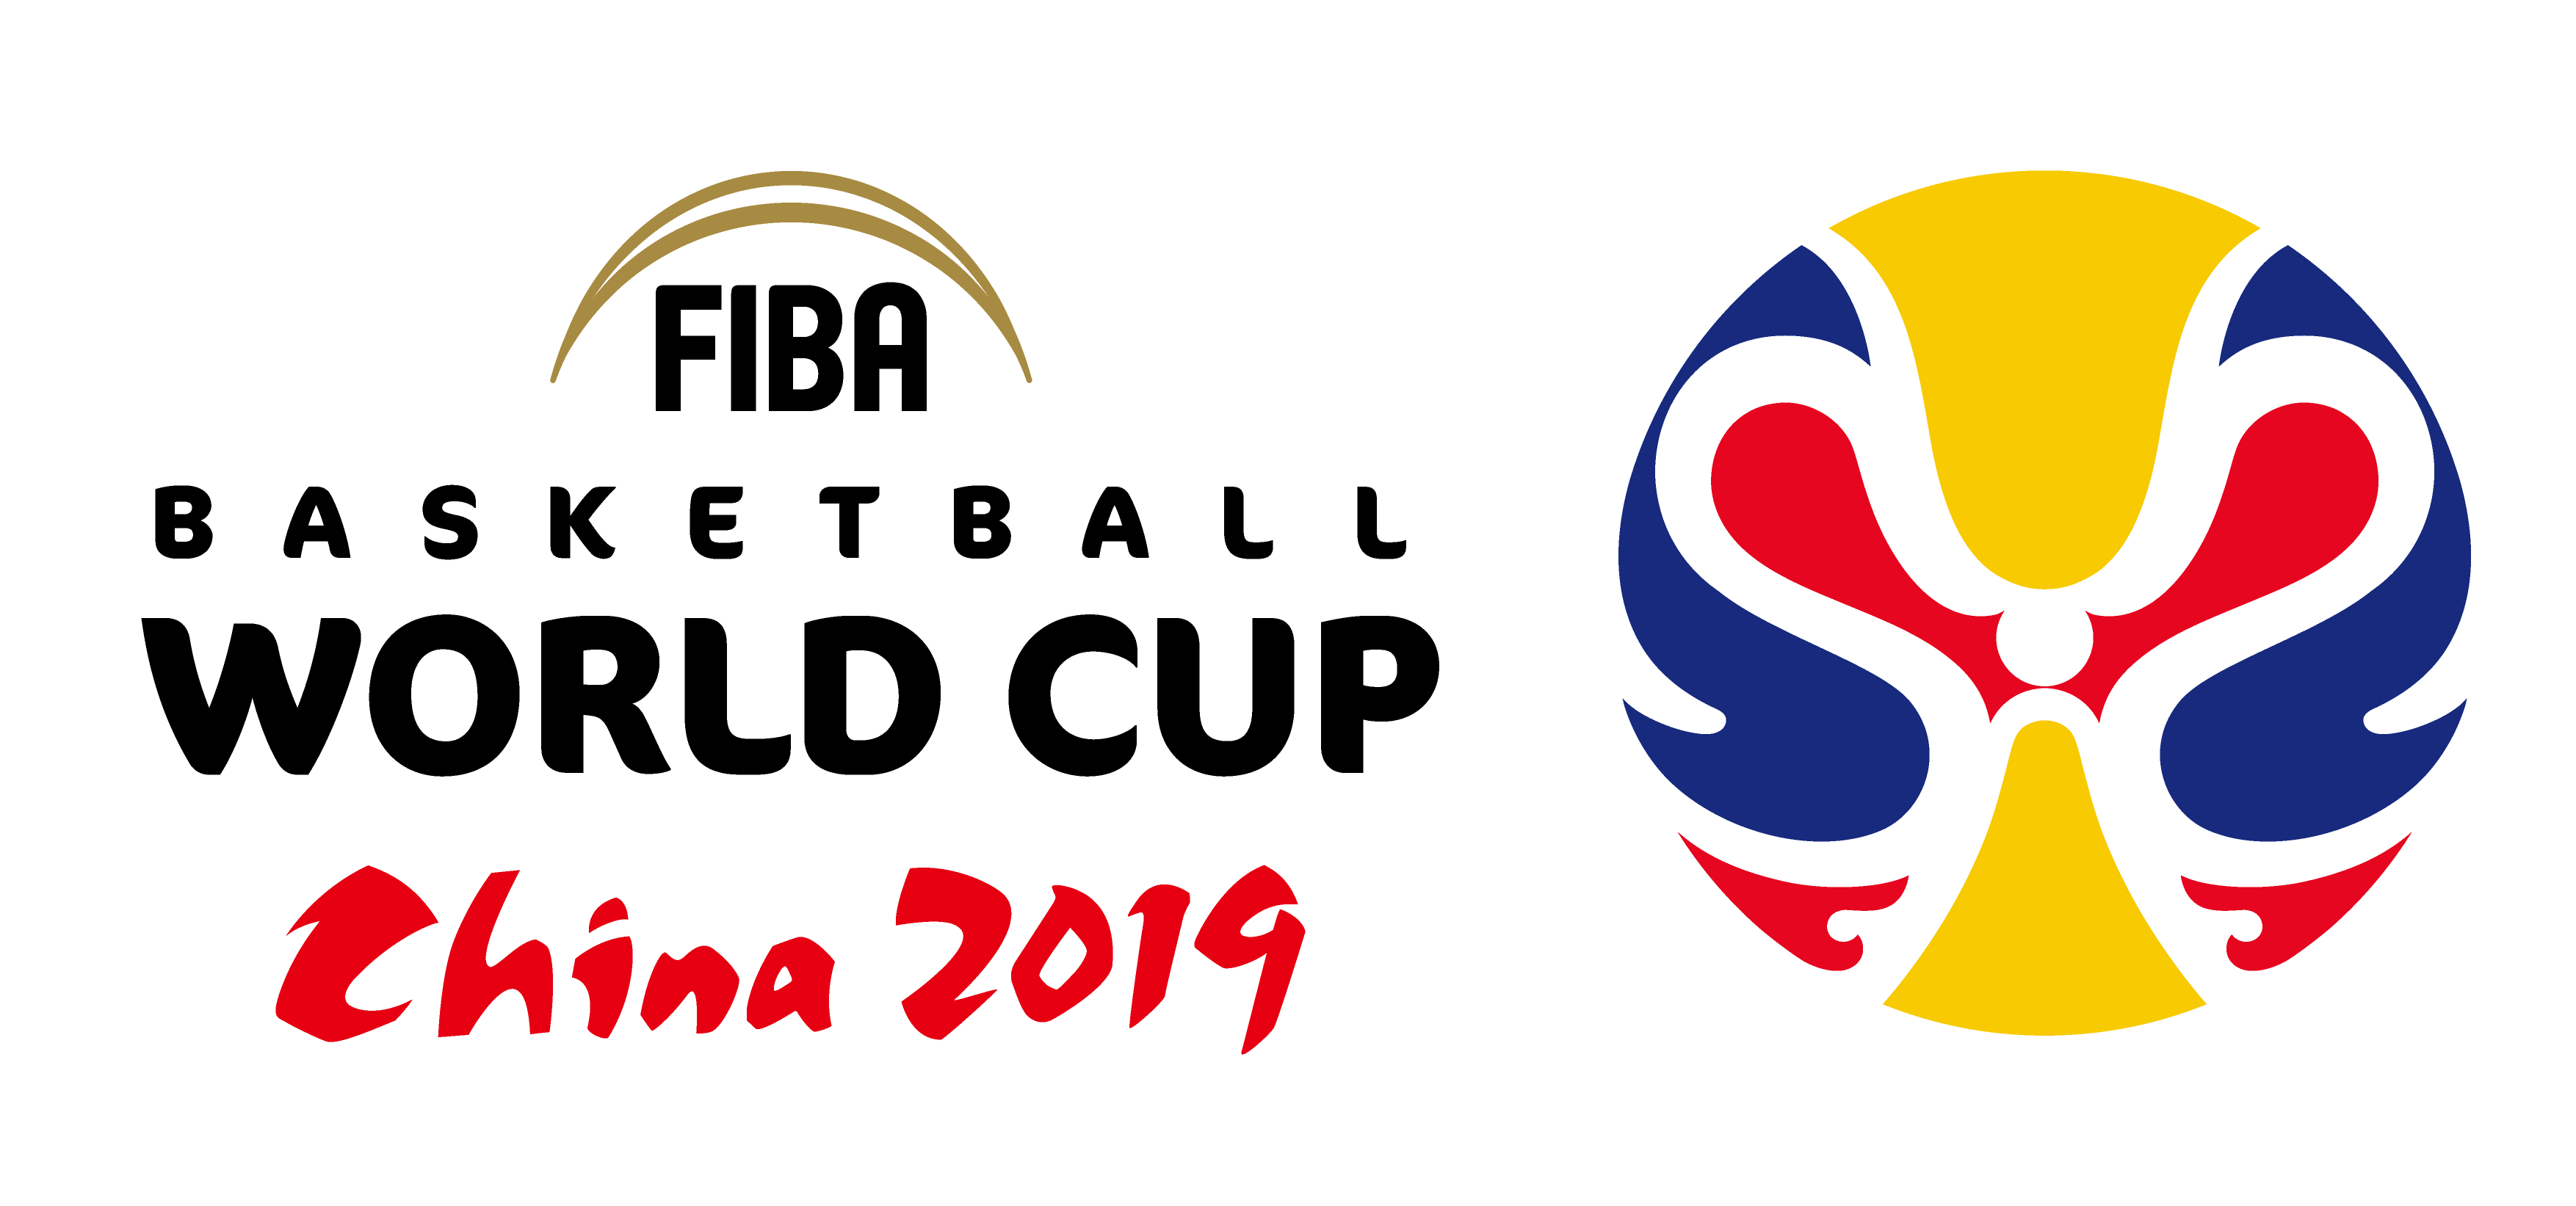 2019 Logo - FIBA Basketball World Cup 2019 Logo Designed by ACEM Student-Antai ...